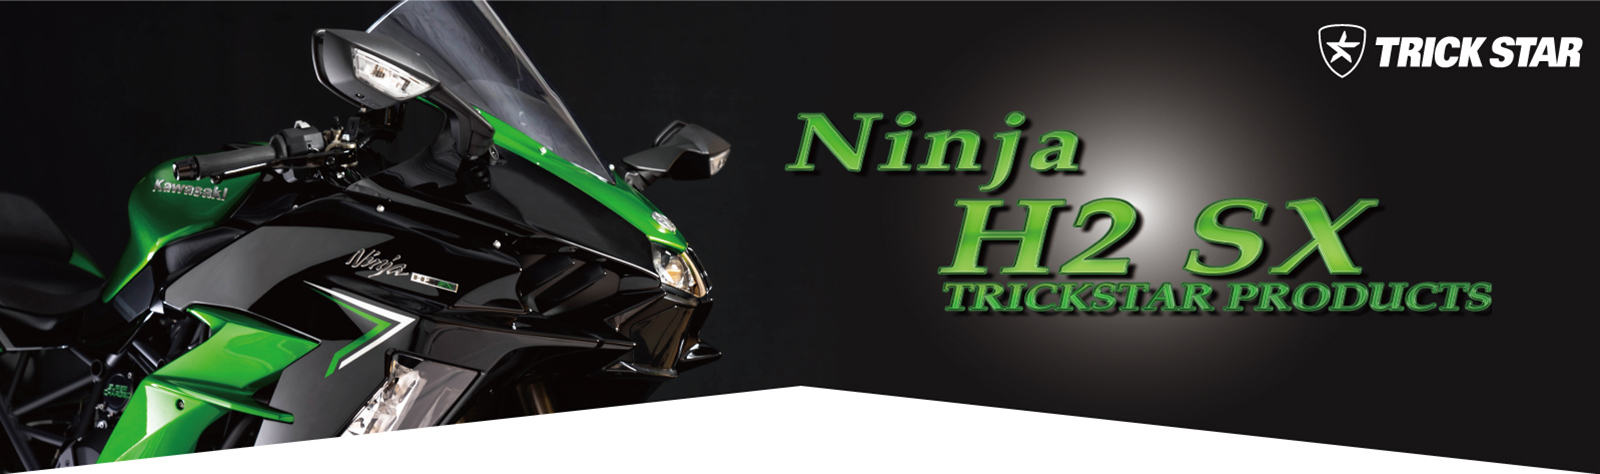 Ninja H2 SX